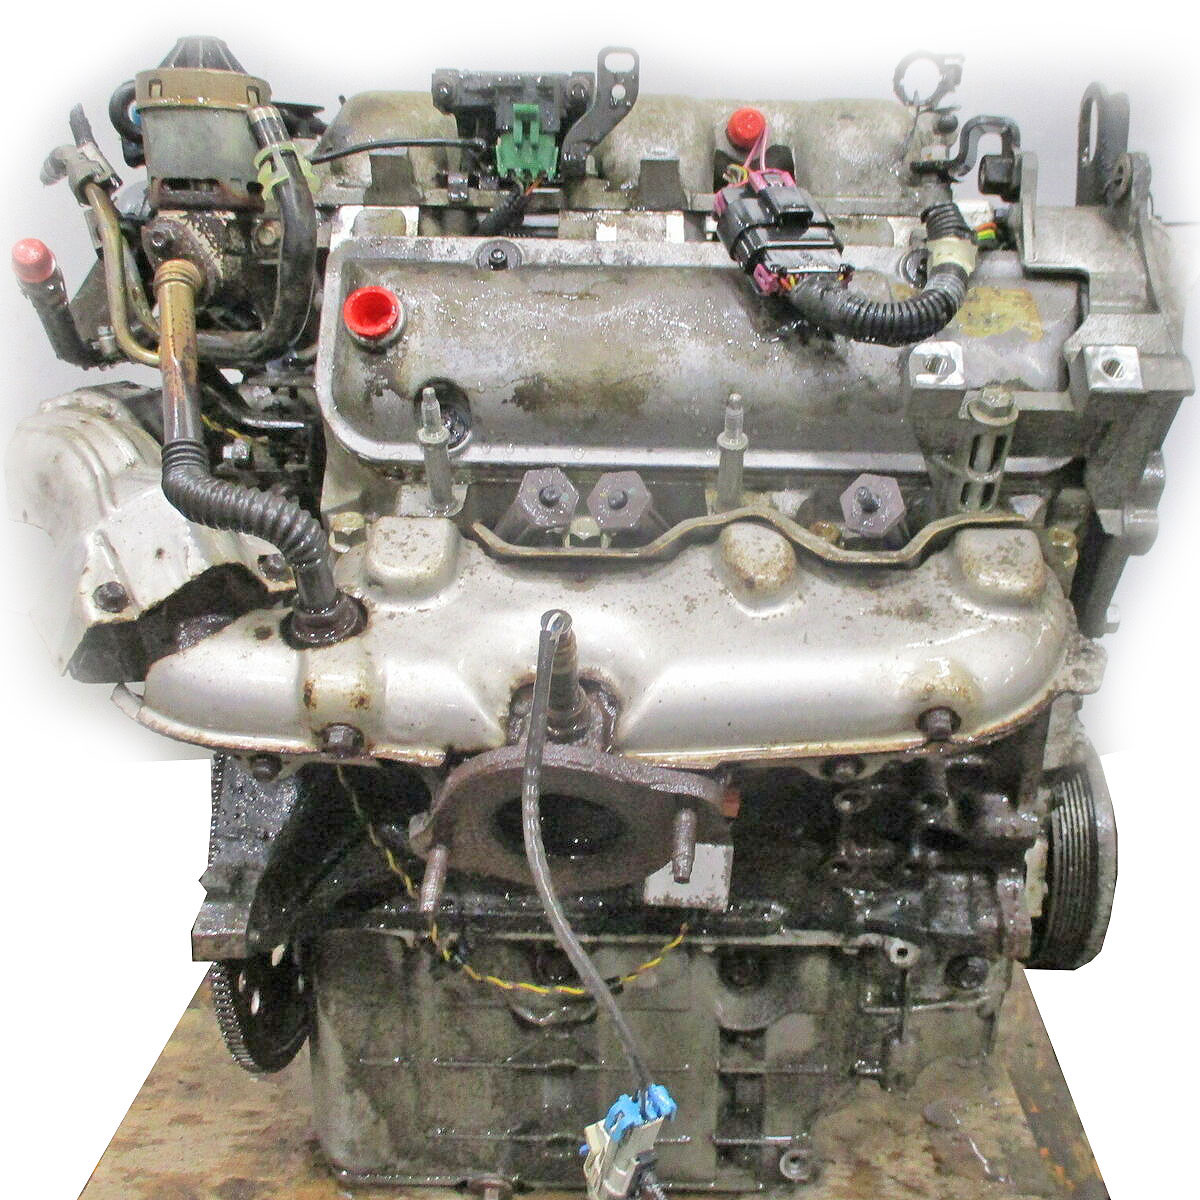 GM 3400 SFI engine reference shot